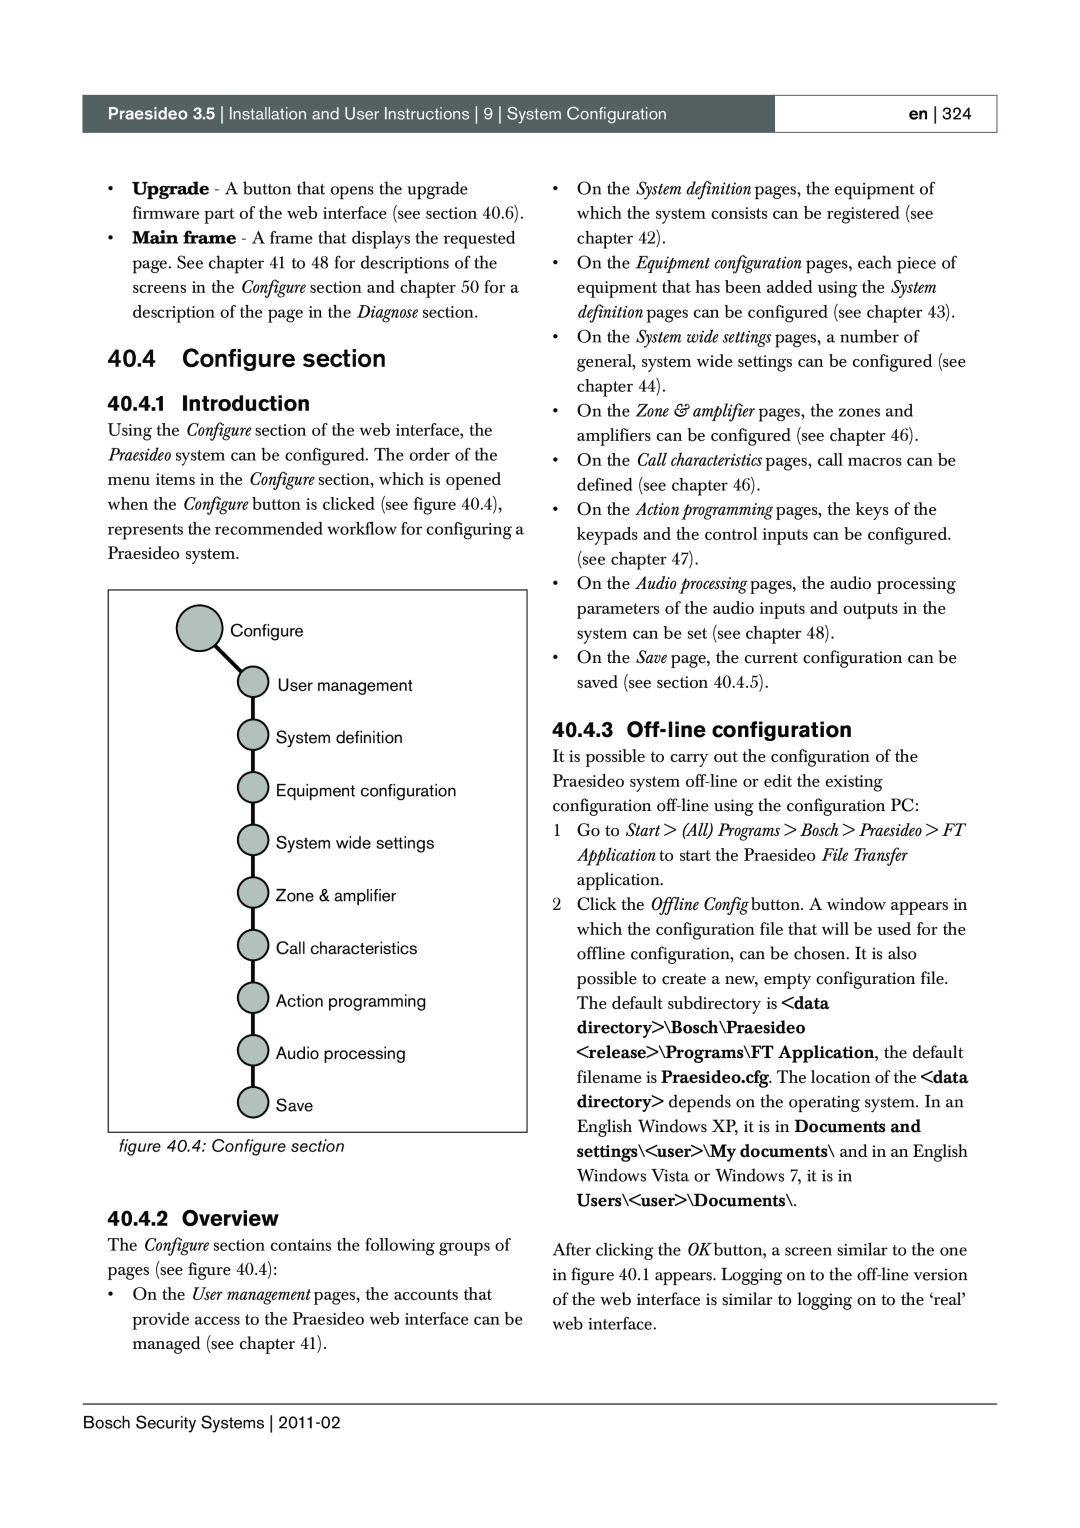 Bosch Appliances 3.5 manual 40.4Configure section, Introduction, Overview, Off-lineconfiguration, 4: Configure section 